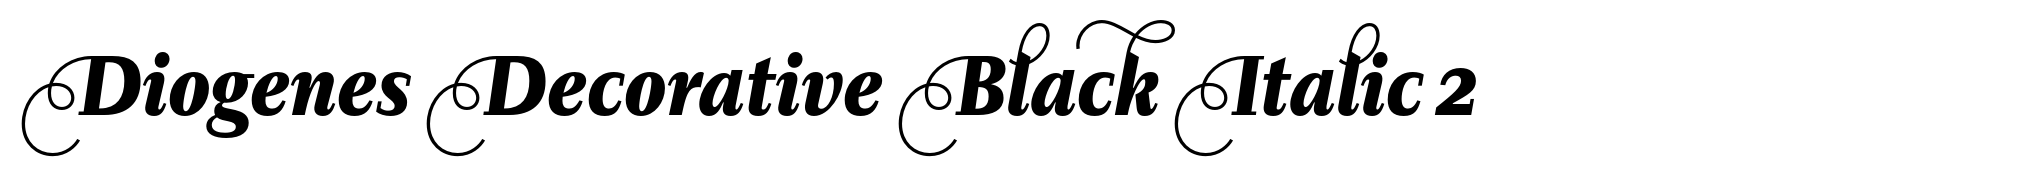 Diogenes Decorative Black Italic 2 image